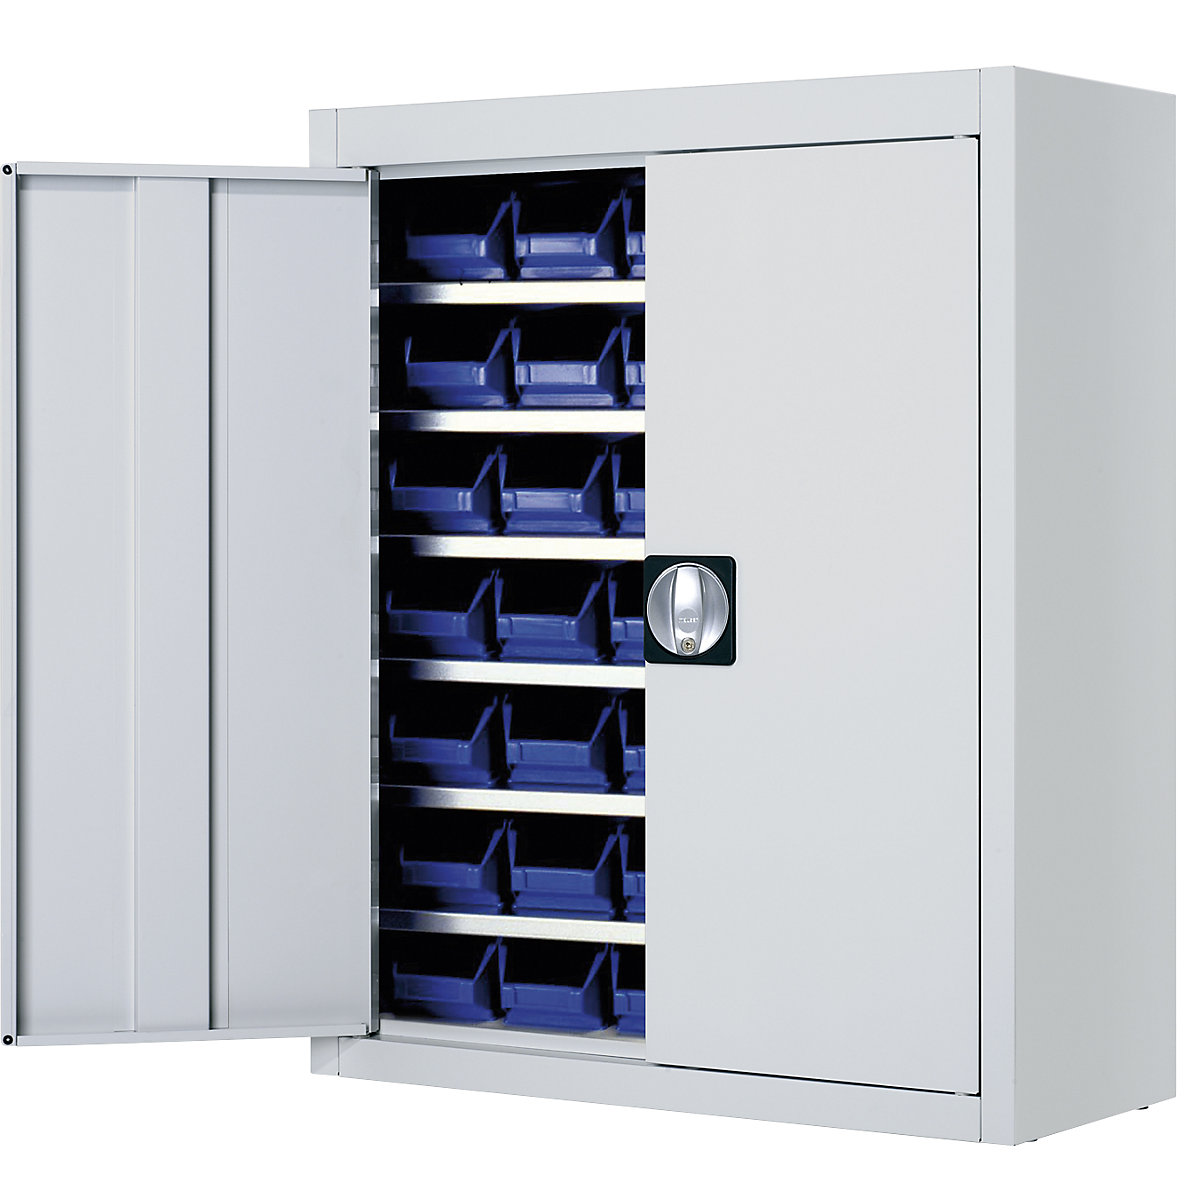 Storage cupboard with open fronted storage bins – mauser, HxWxD 820 x 680 x 280 mm, single colour, grey, 42 bins-3